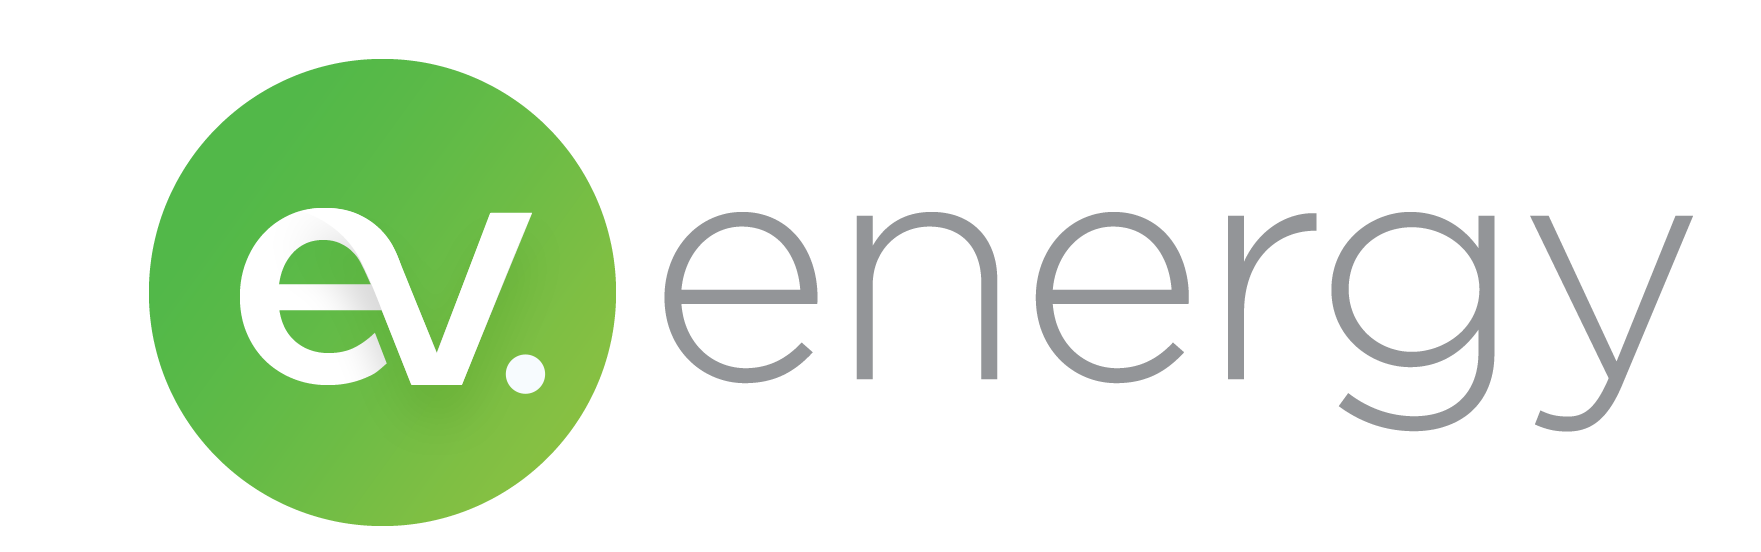 ev-energy-logo-2018-1920x